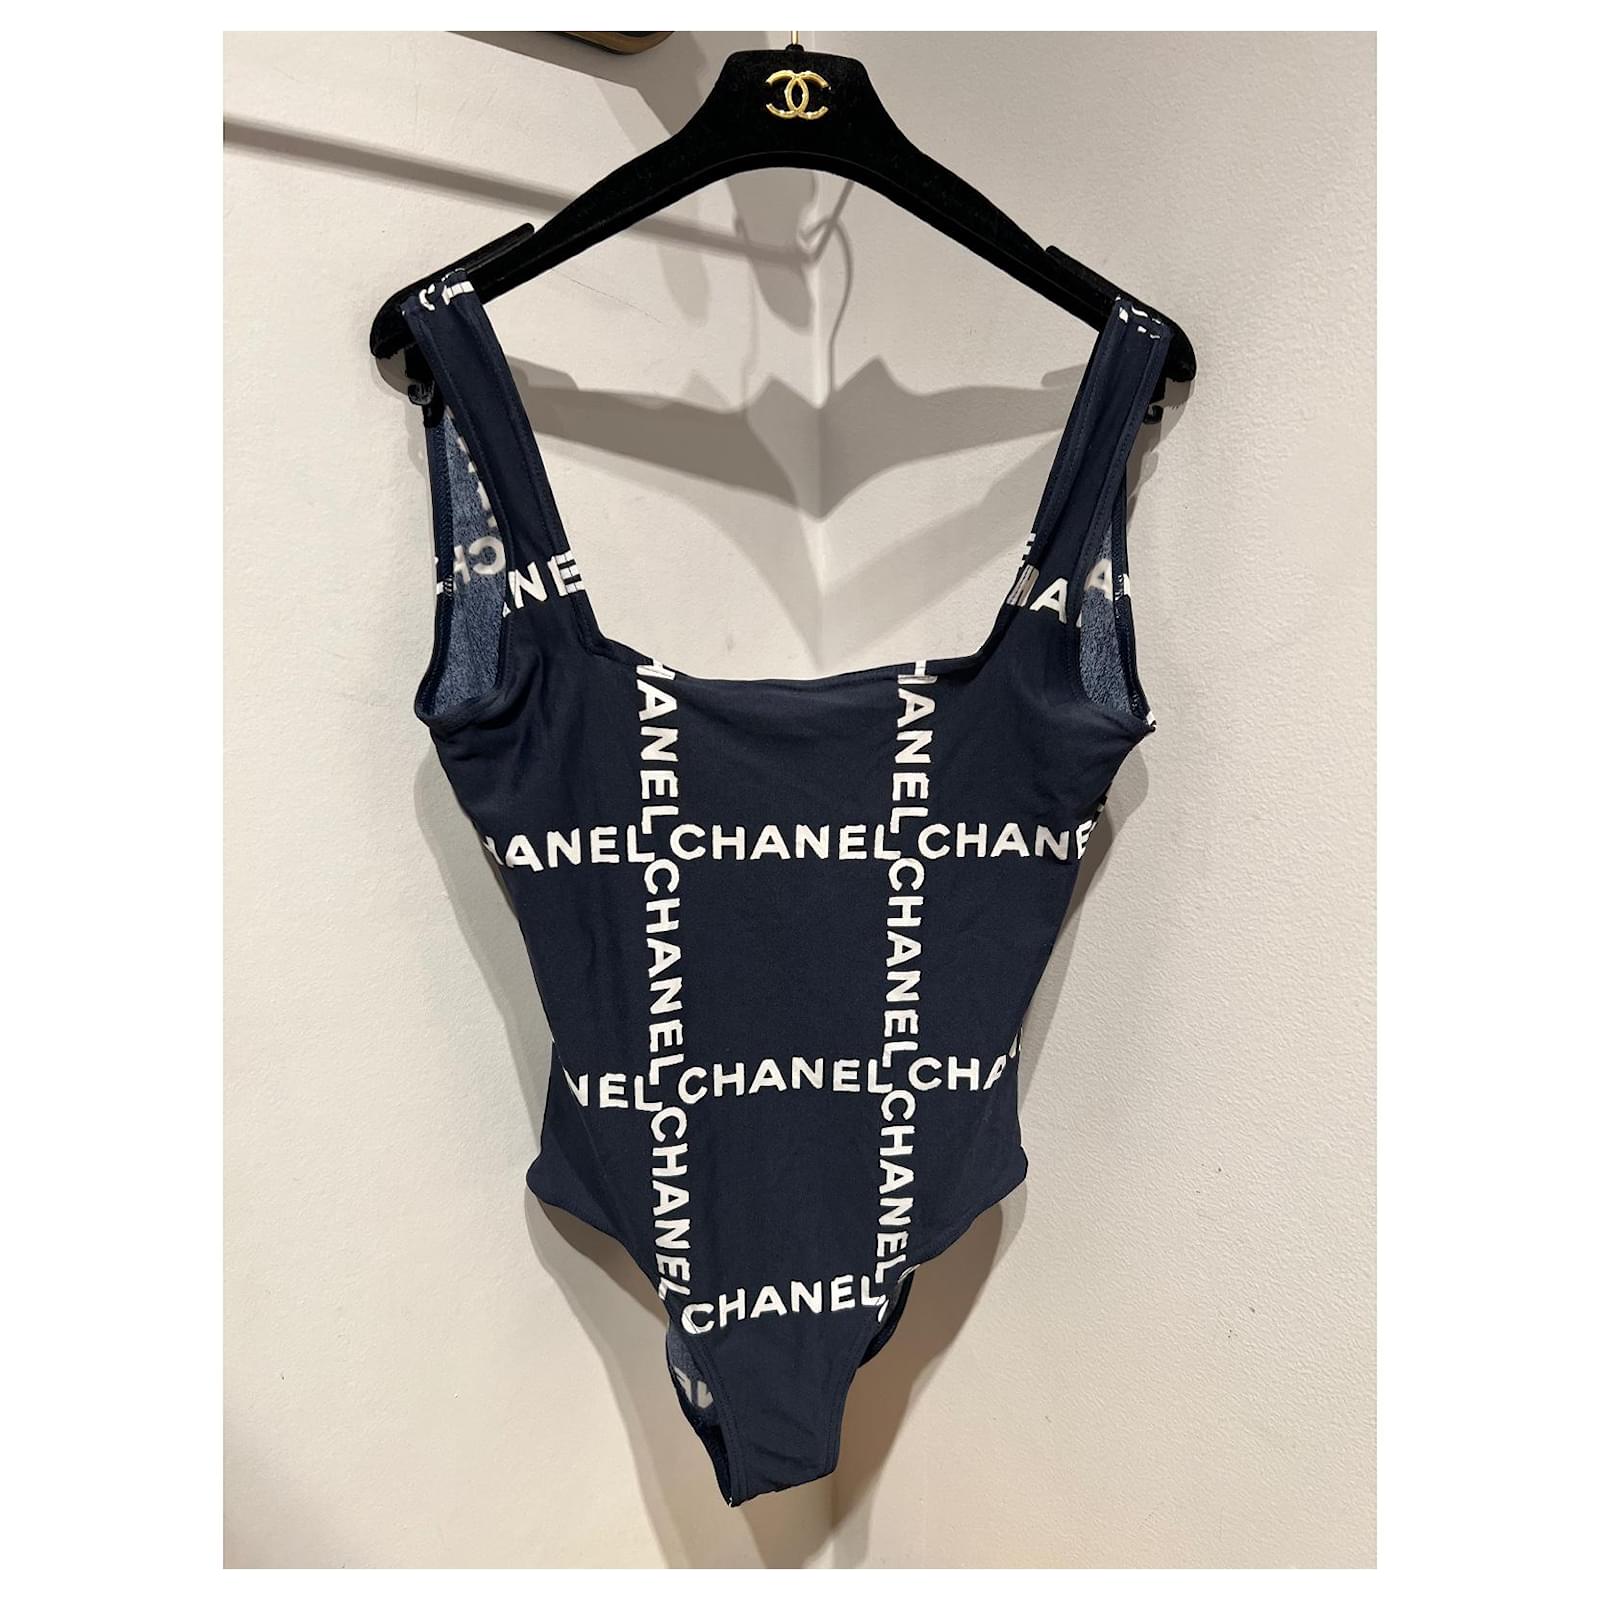 2 piece Chanel bathing suit